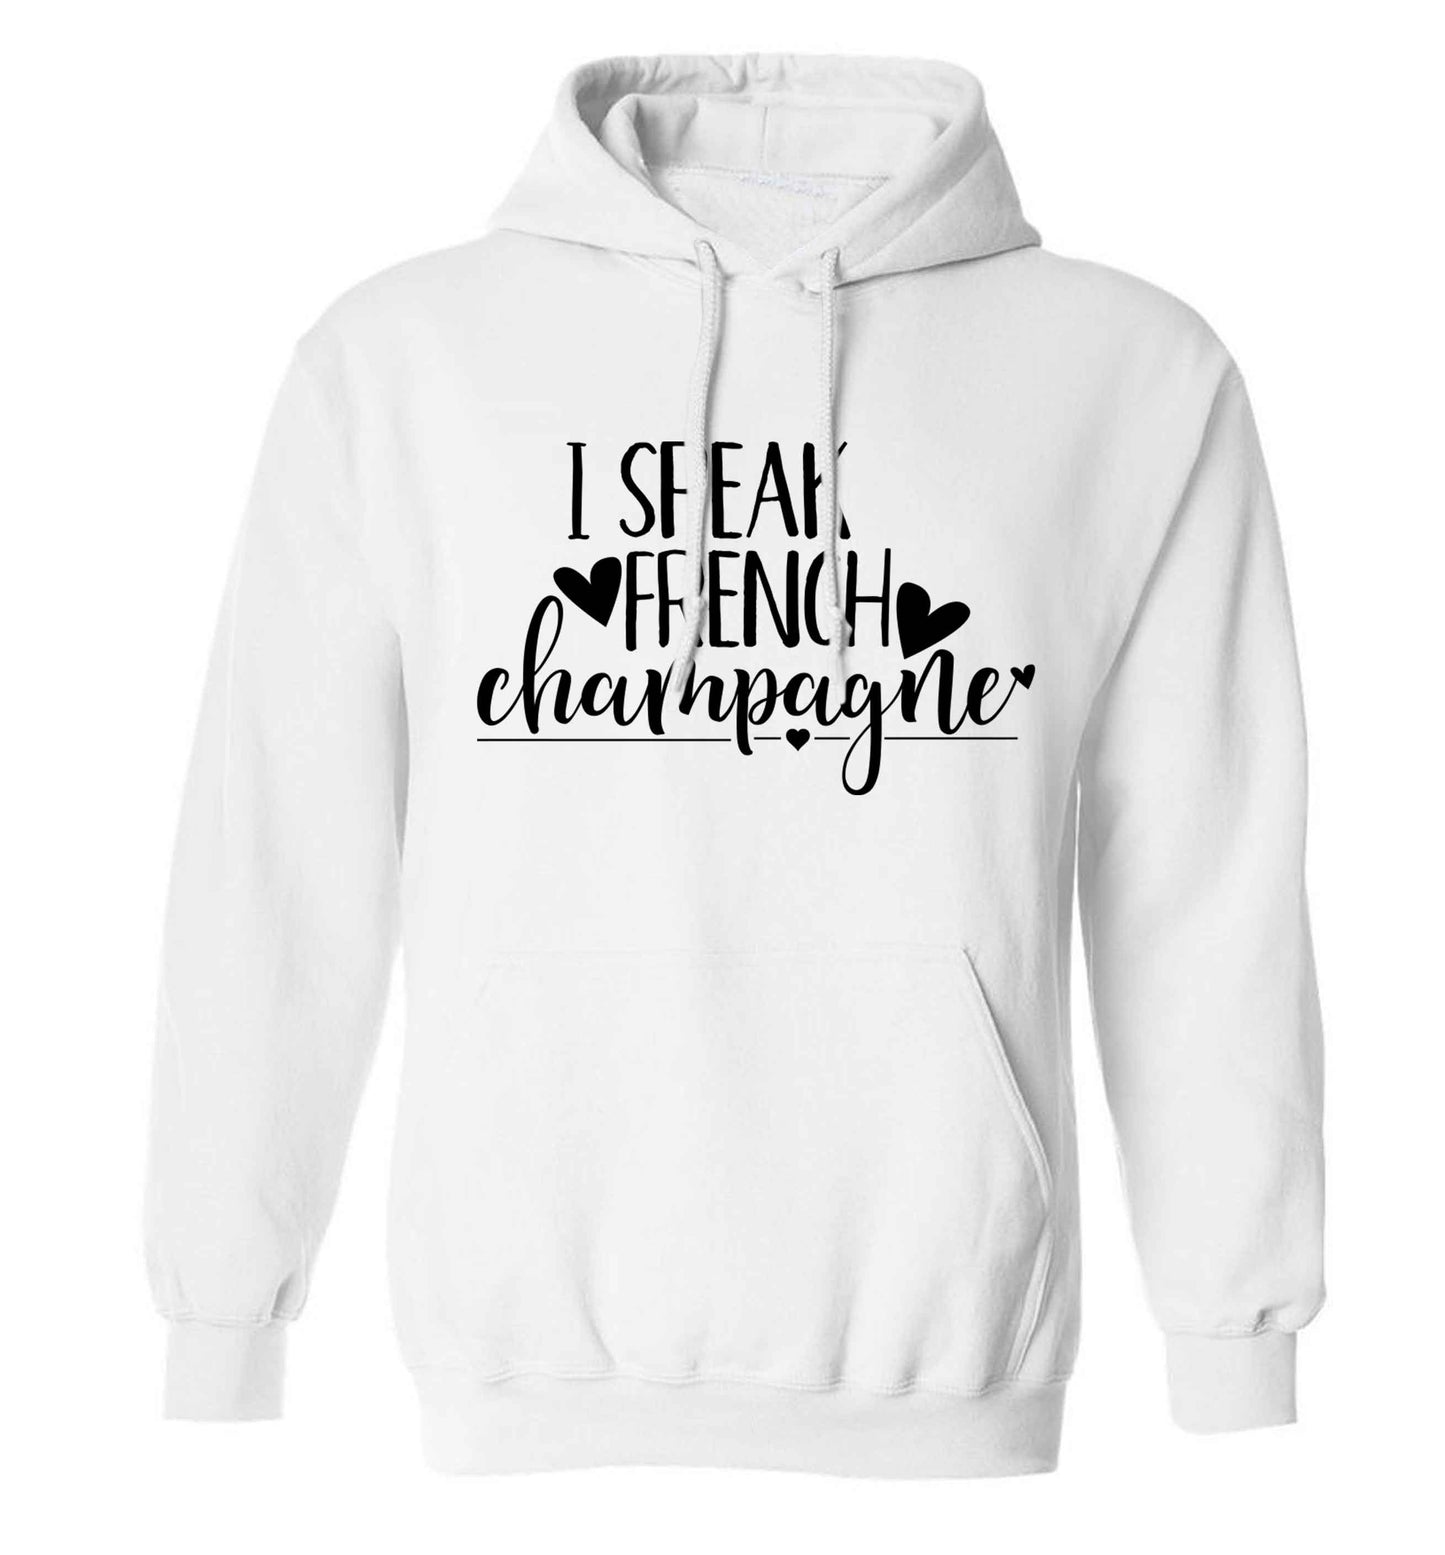 I speak french champagne adults unisex white hoodie 2XL